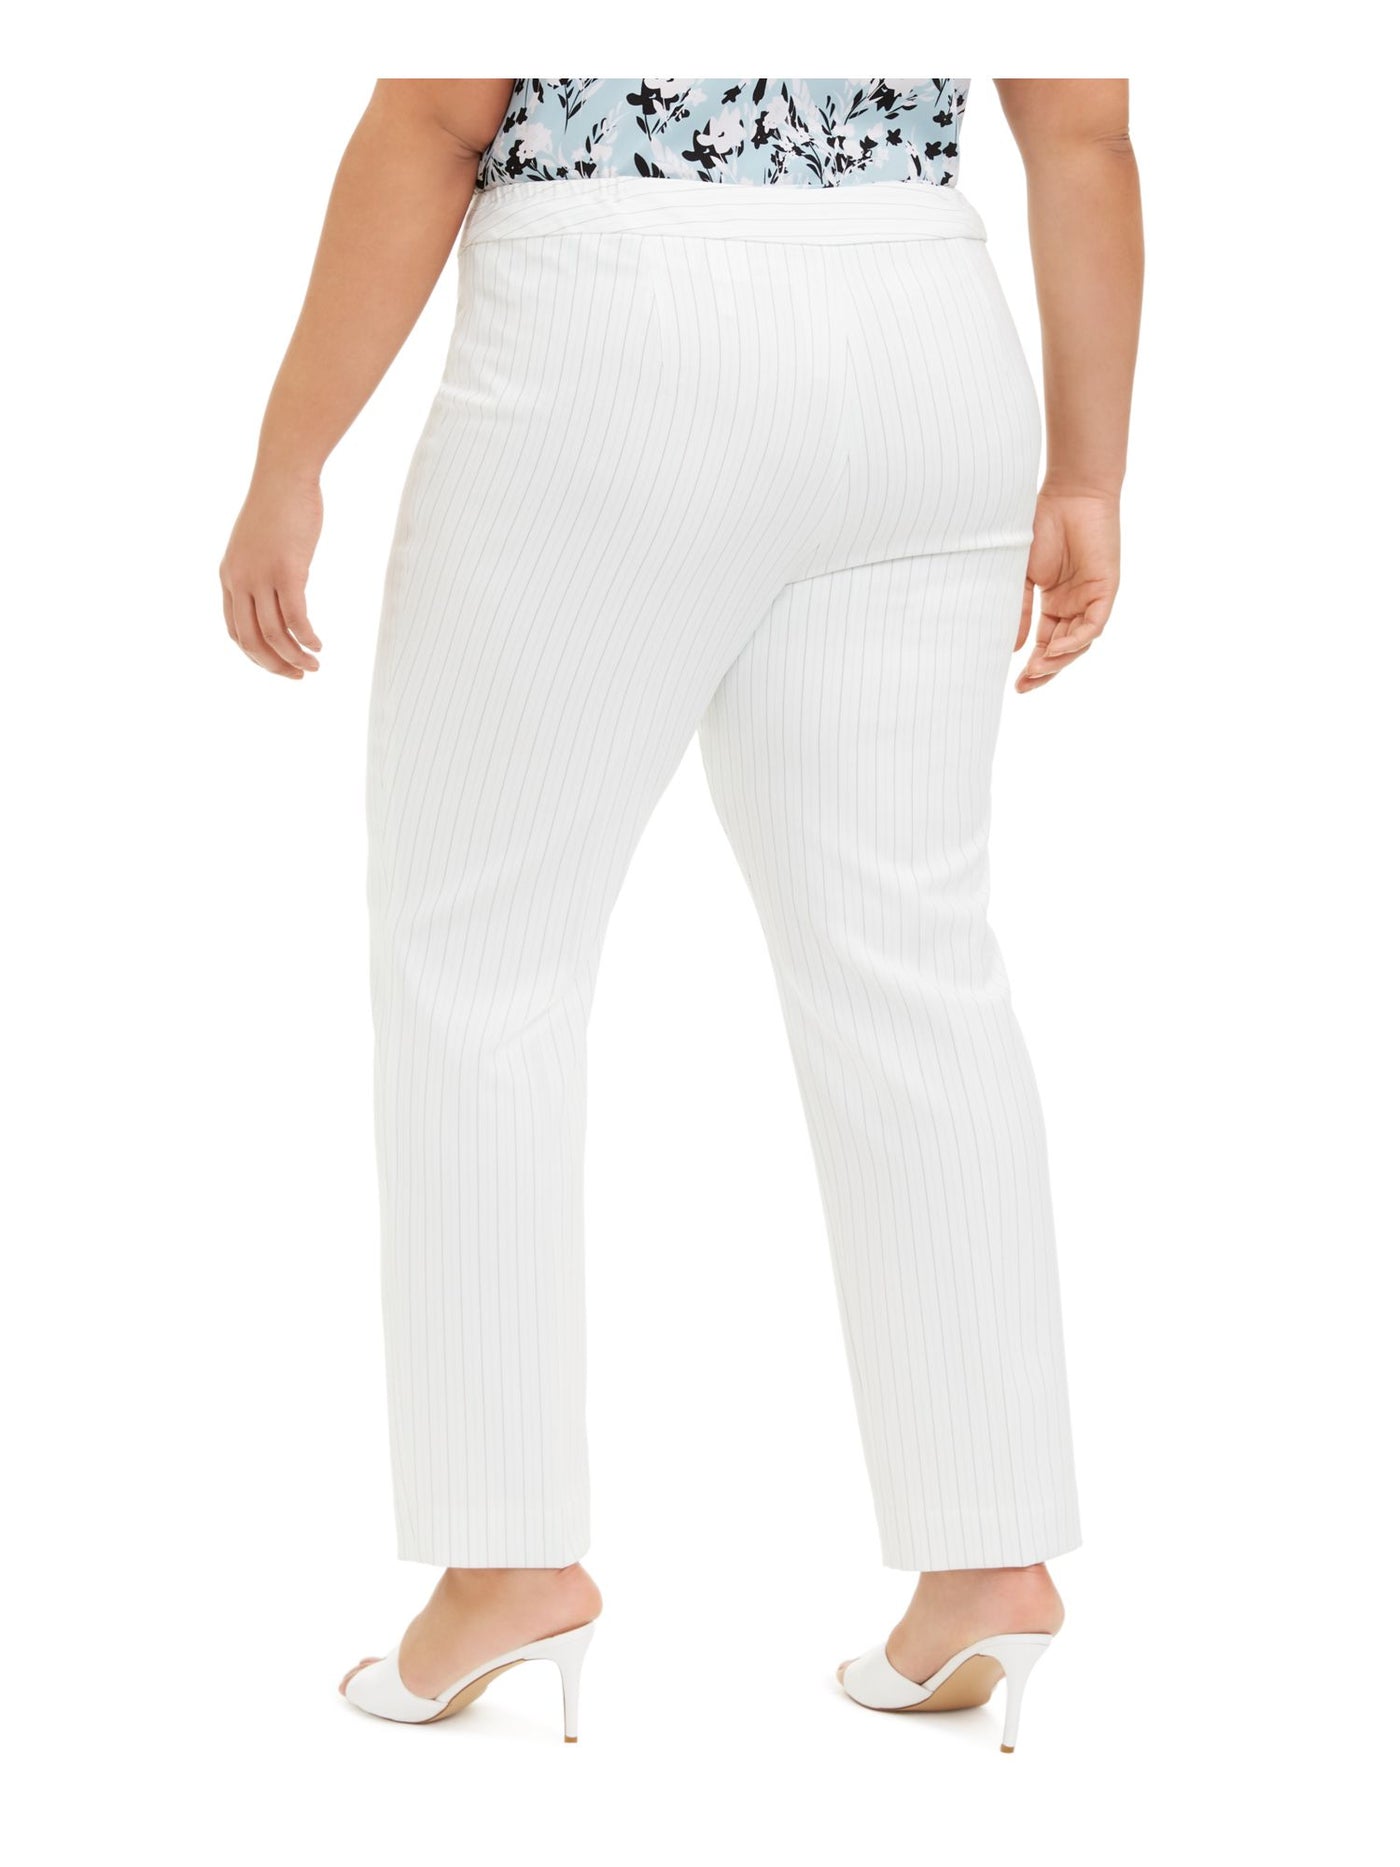 NINE WEST Womens White Pocketed Zippered Stretch Pinstripe Wear To Work Skinny Pants 18W